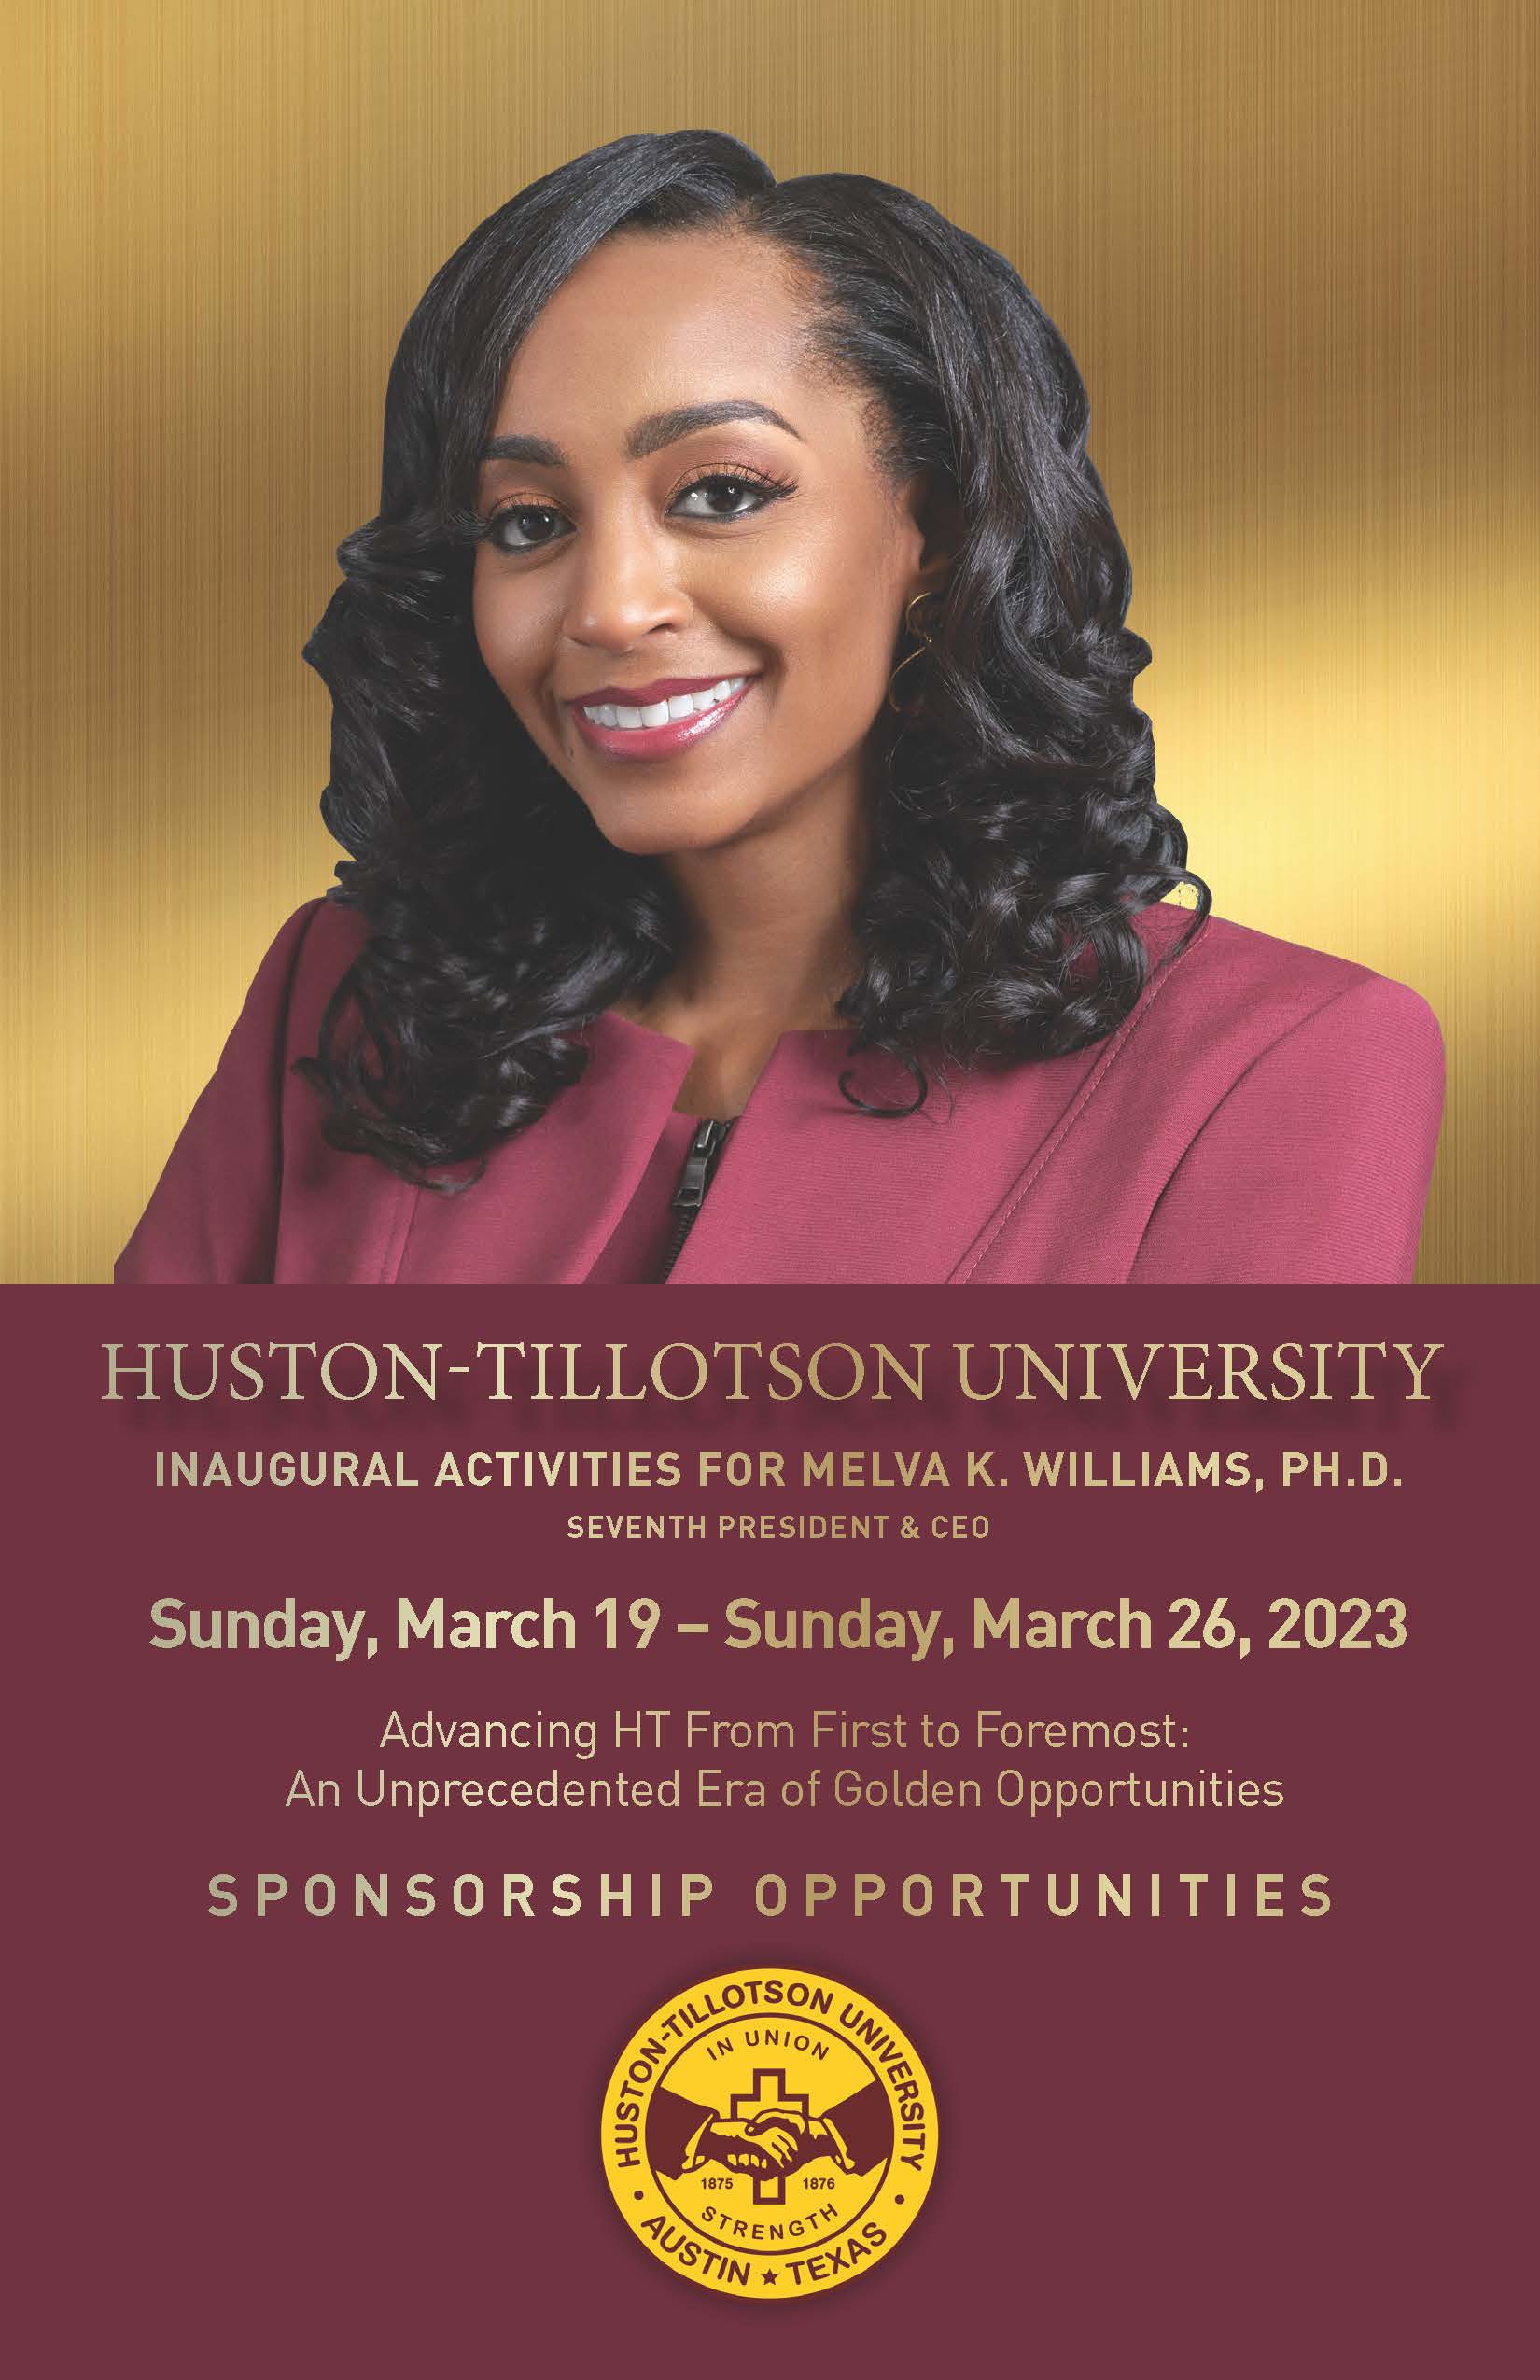 Huston-Tillotson University's Inauguration